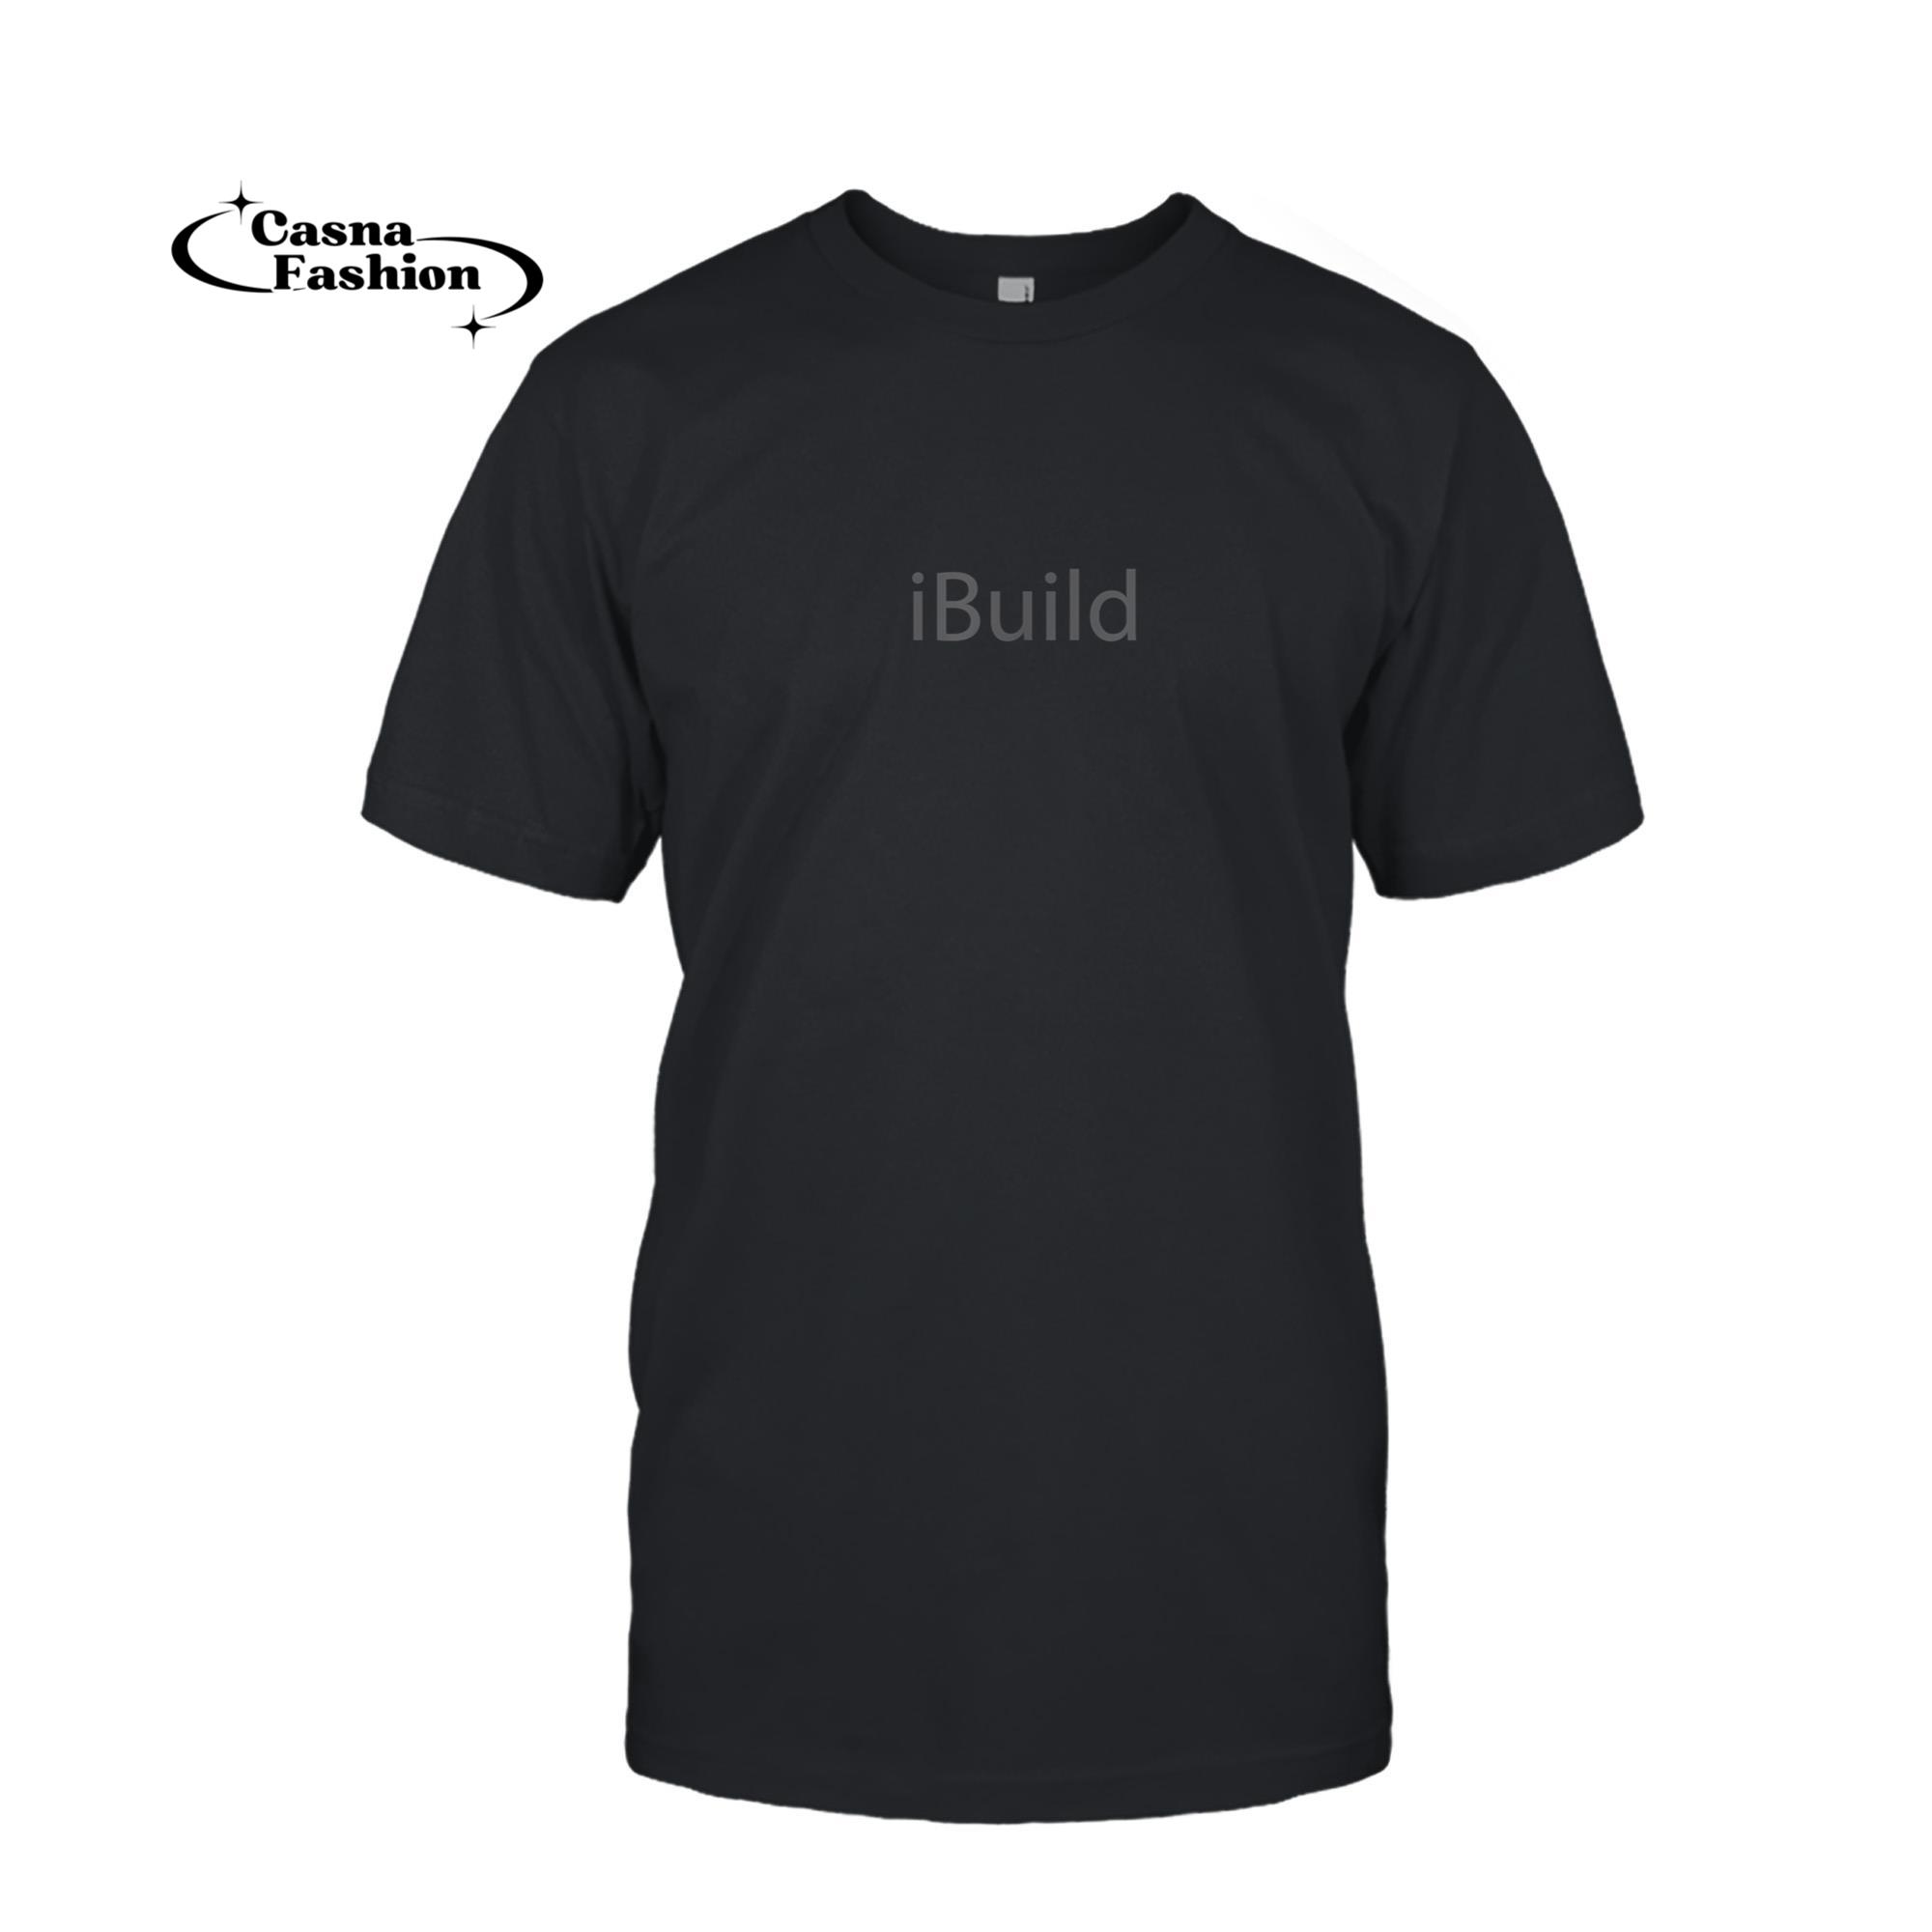 casnafashion_T-shirt_I Build Construction Carpenter Contractor Builder T-Shirt_T-shirt_Black